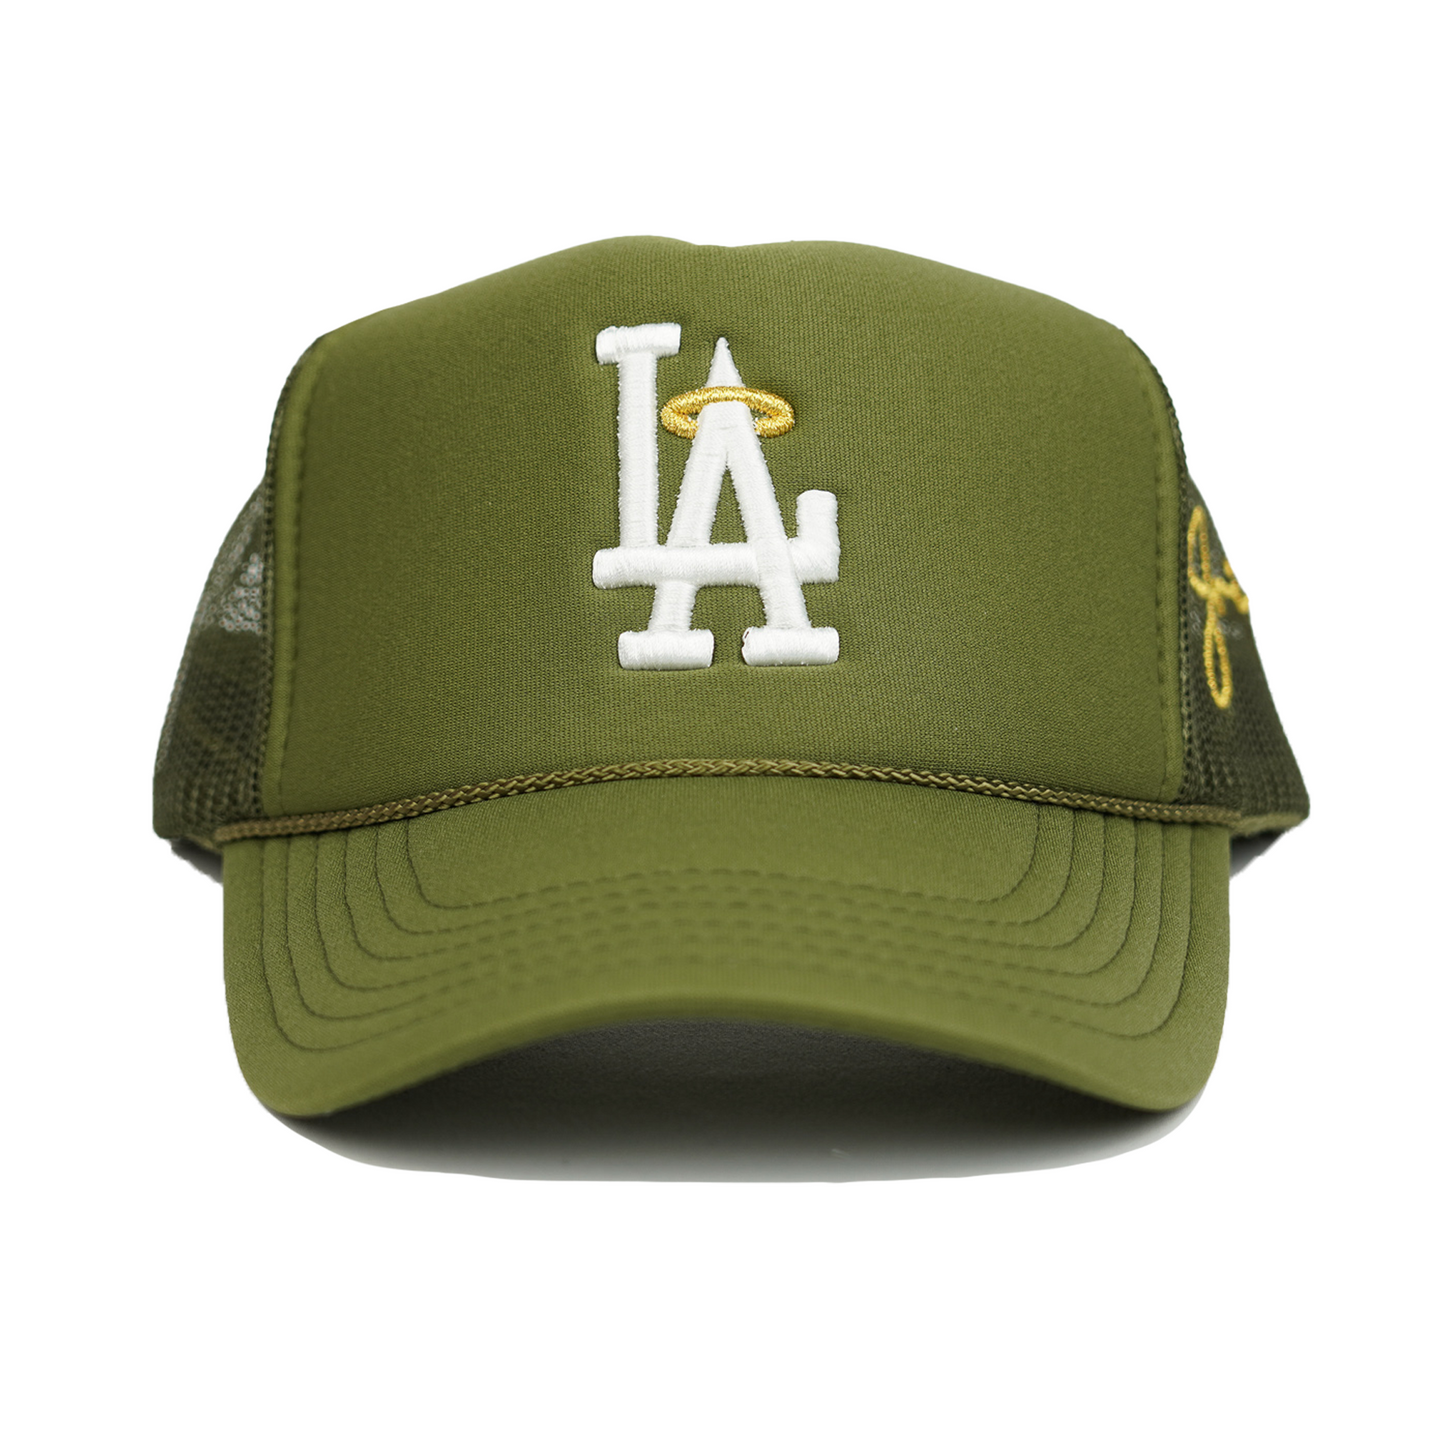 LA Halo Trucker Hat (OLIVE GREEN)